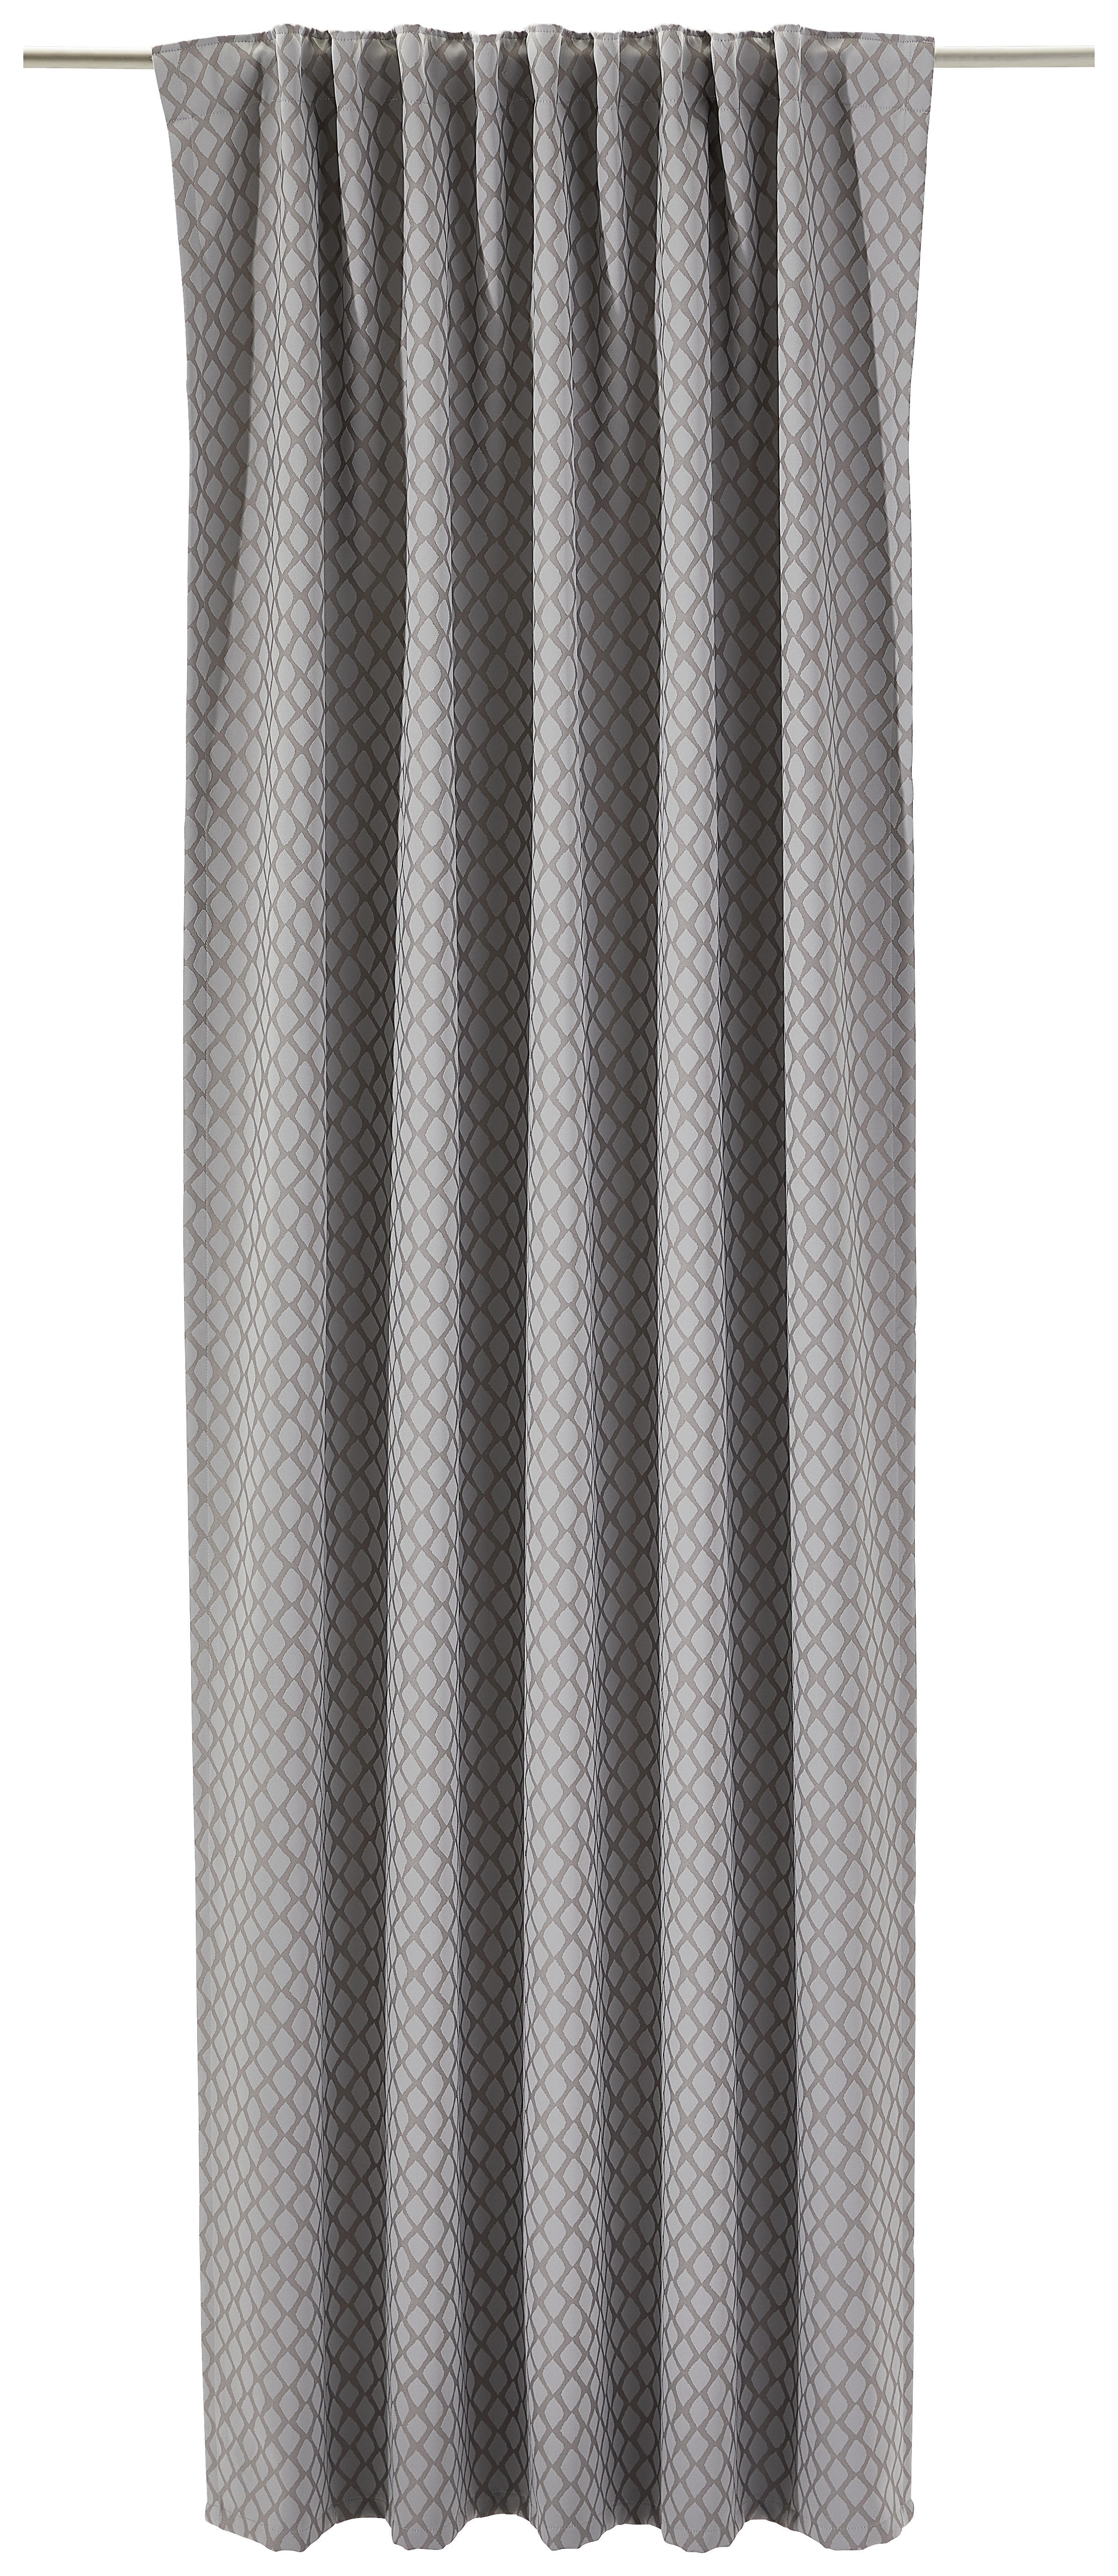 FERTIGVORHANG LUNA blickdicht 140/245 cm   - Grau, KONVENTIONELL, Textil (140/245cm) - Dieter Knoll